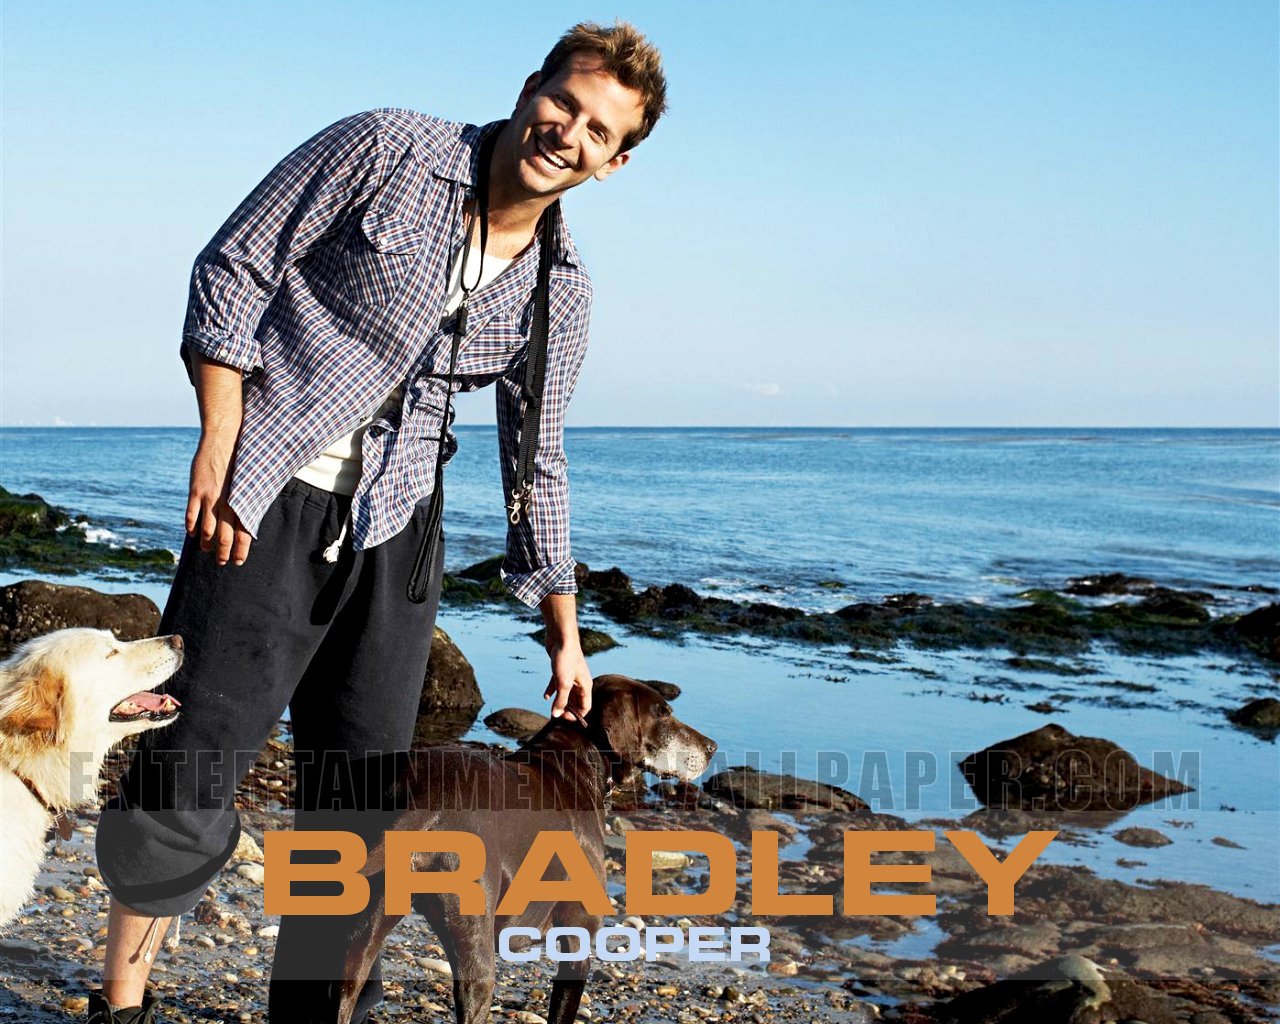 bradley cooper   Bradley Cooper Wallpaper 23904577